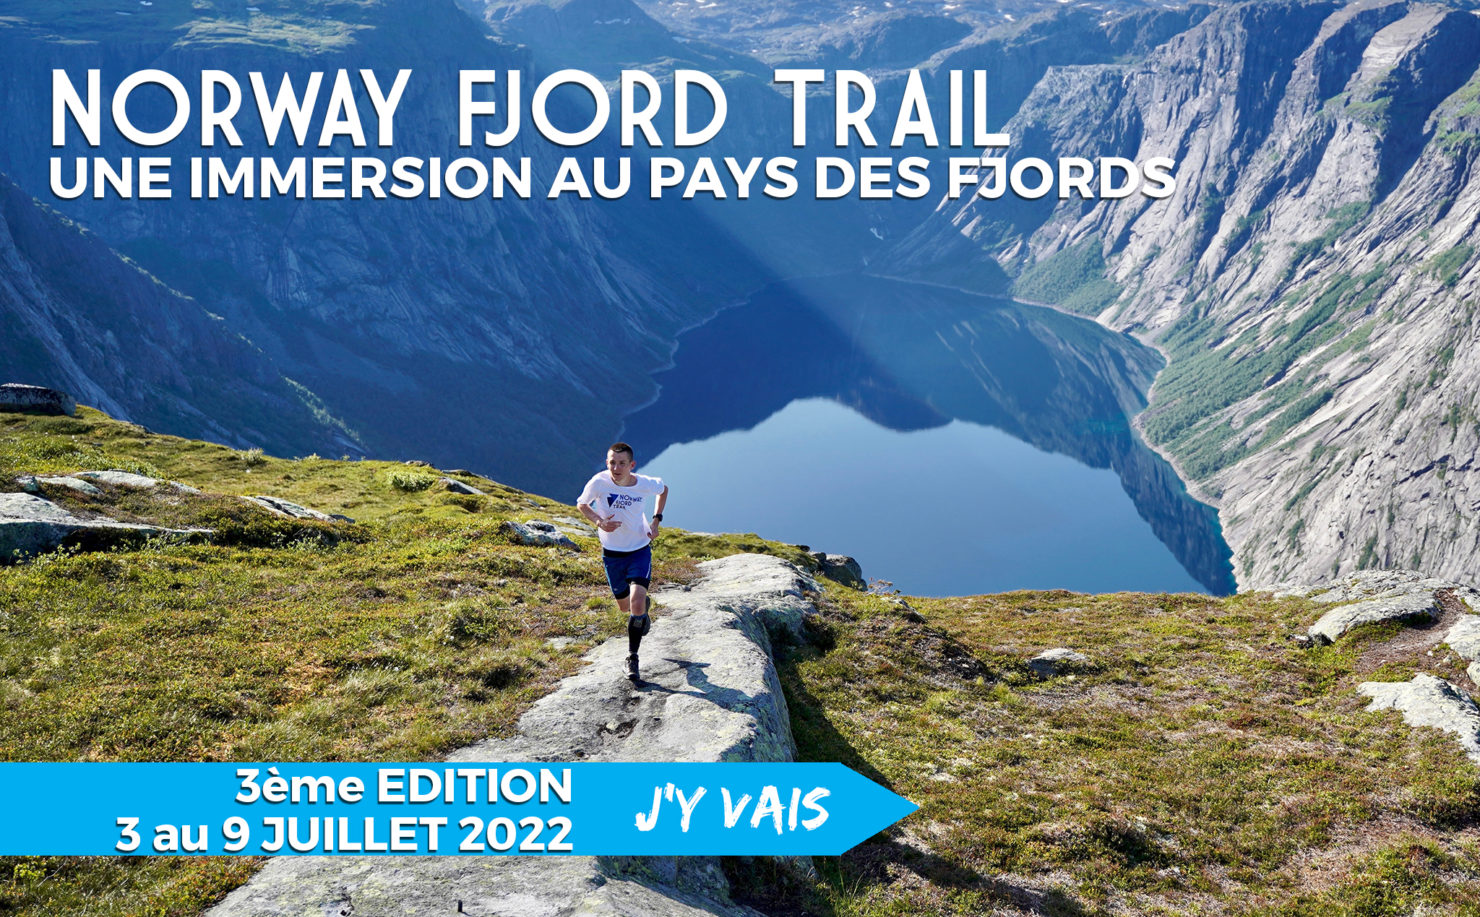 Norway Fjord Trail découverte Norvège destination voyage trail immersion sport running course à pied agenda